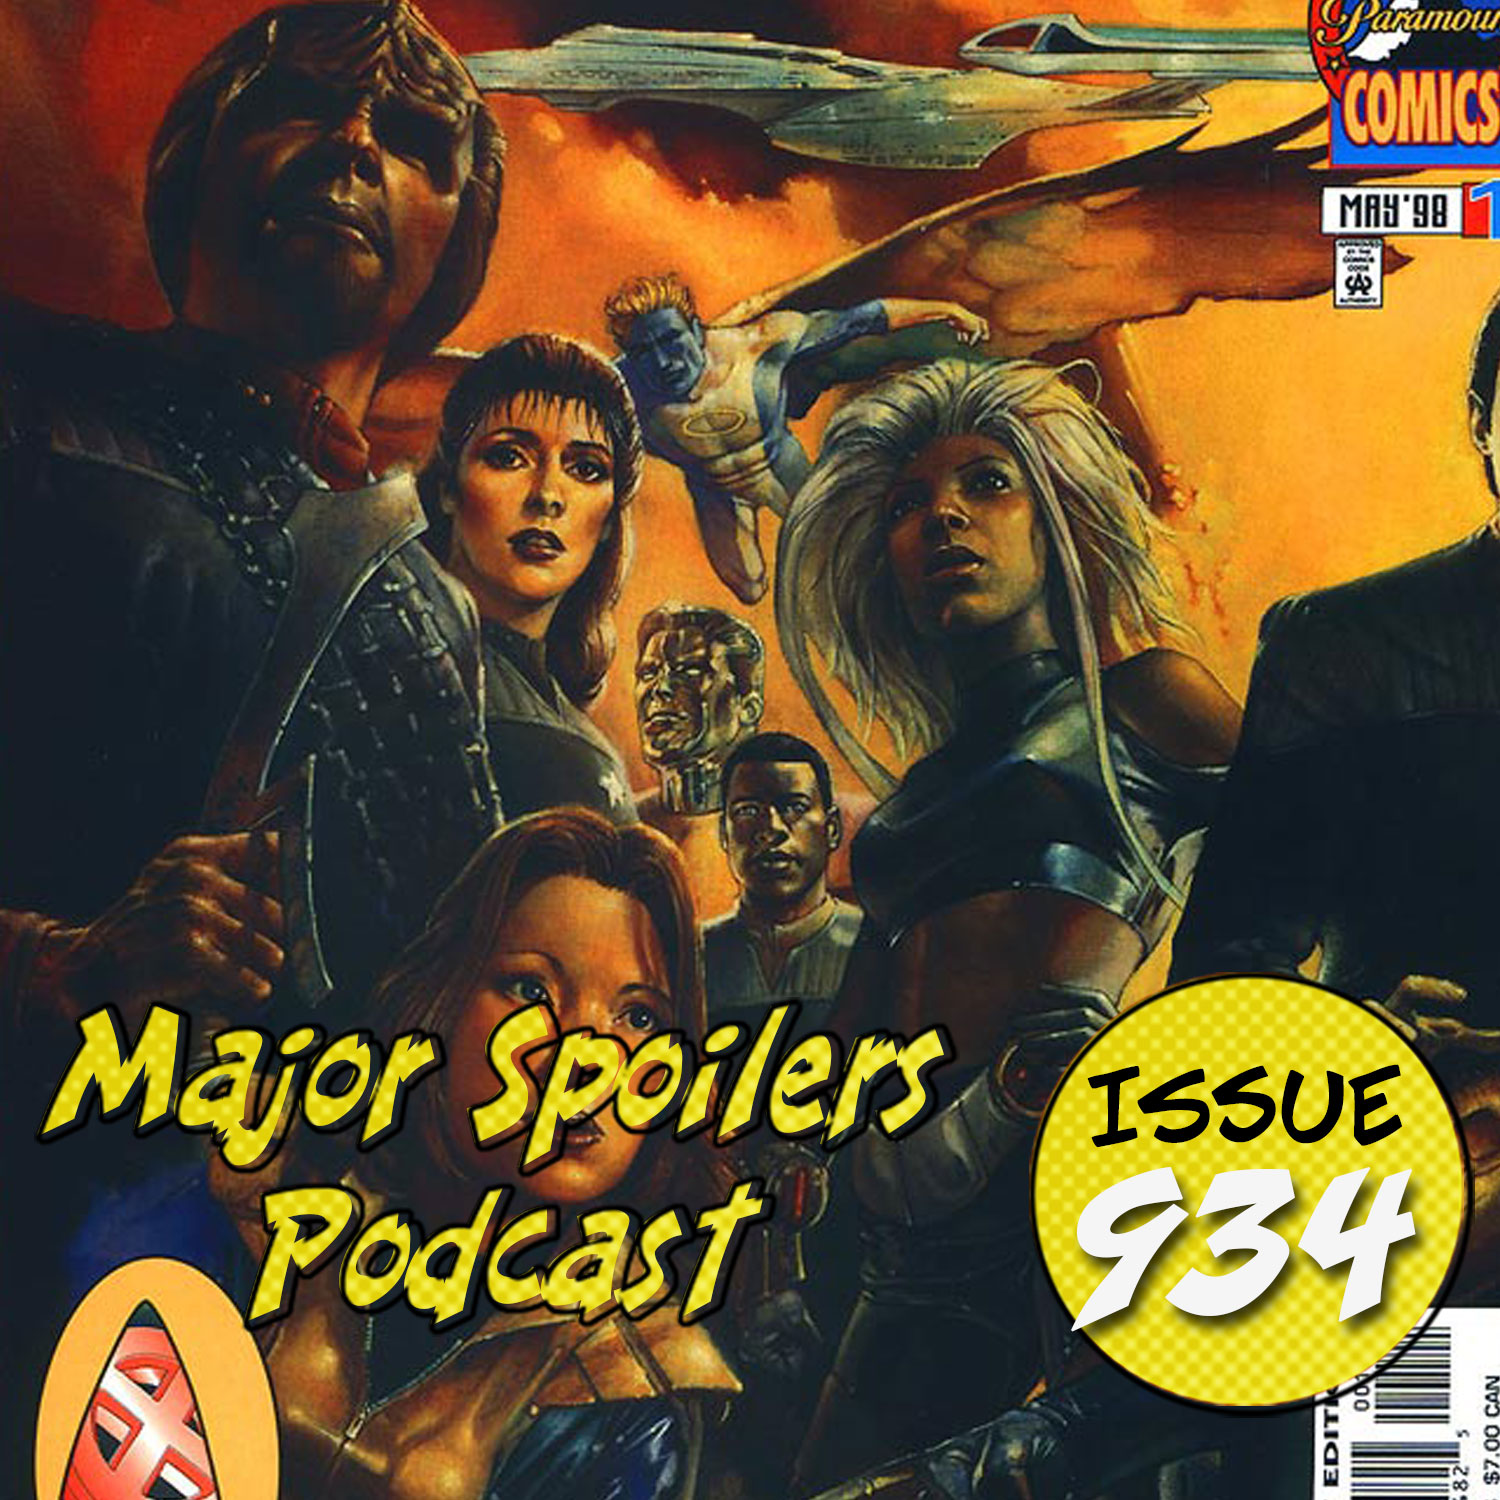 Major Spoilers Podcast #934: Star Trek Meets the X-Men  (corrected)